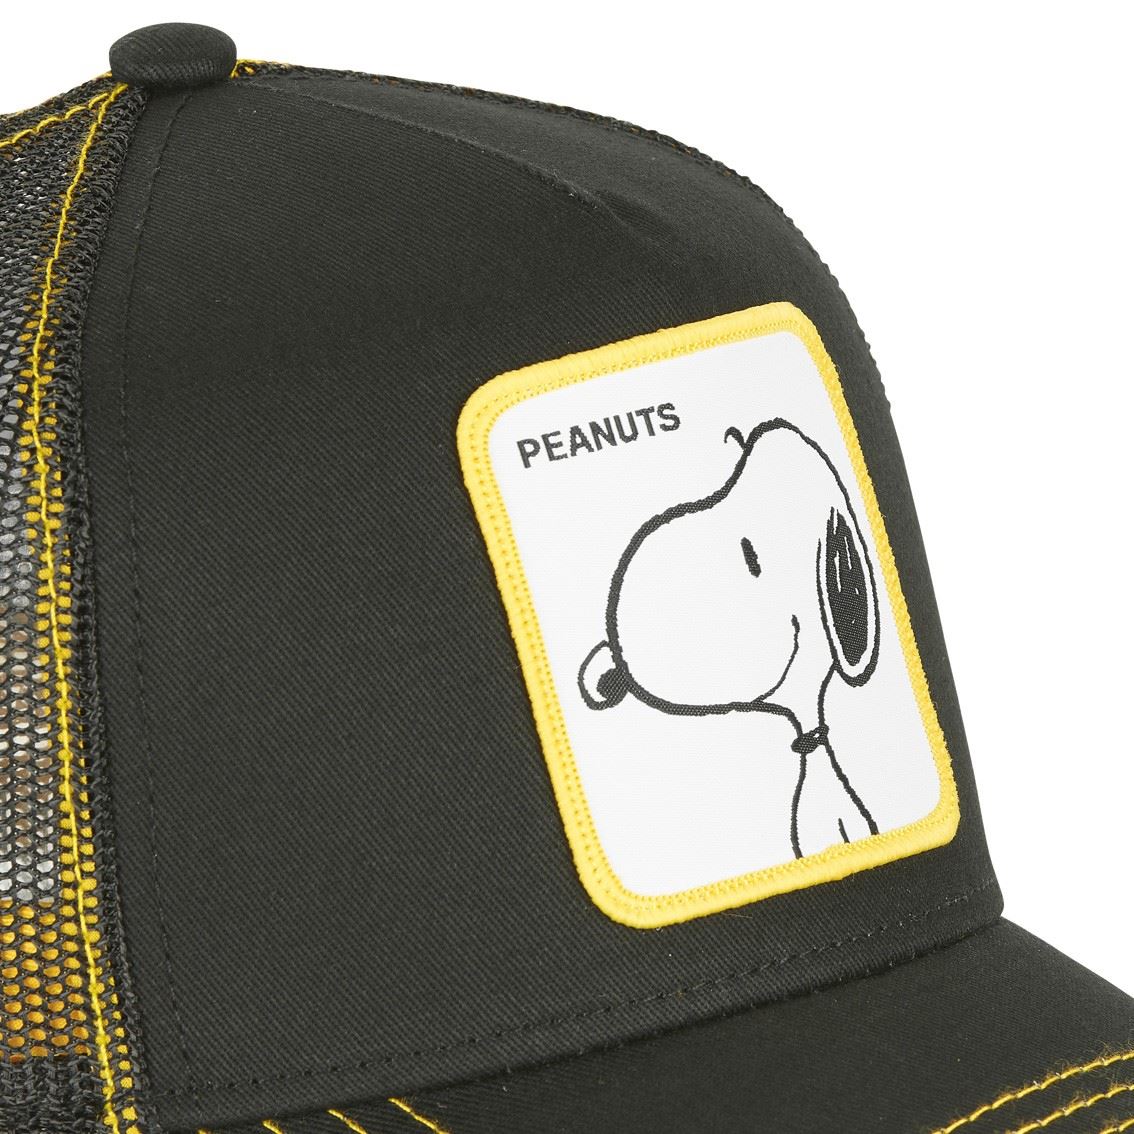 Snoopy The Peanuts Black Yellow Trucker Cap Capslab